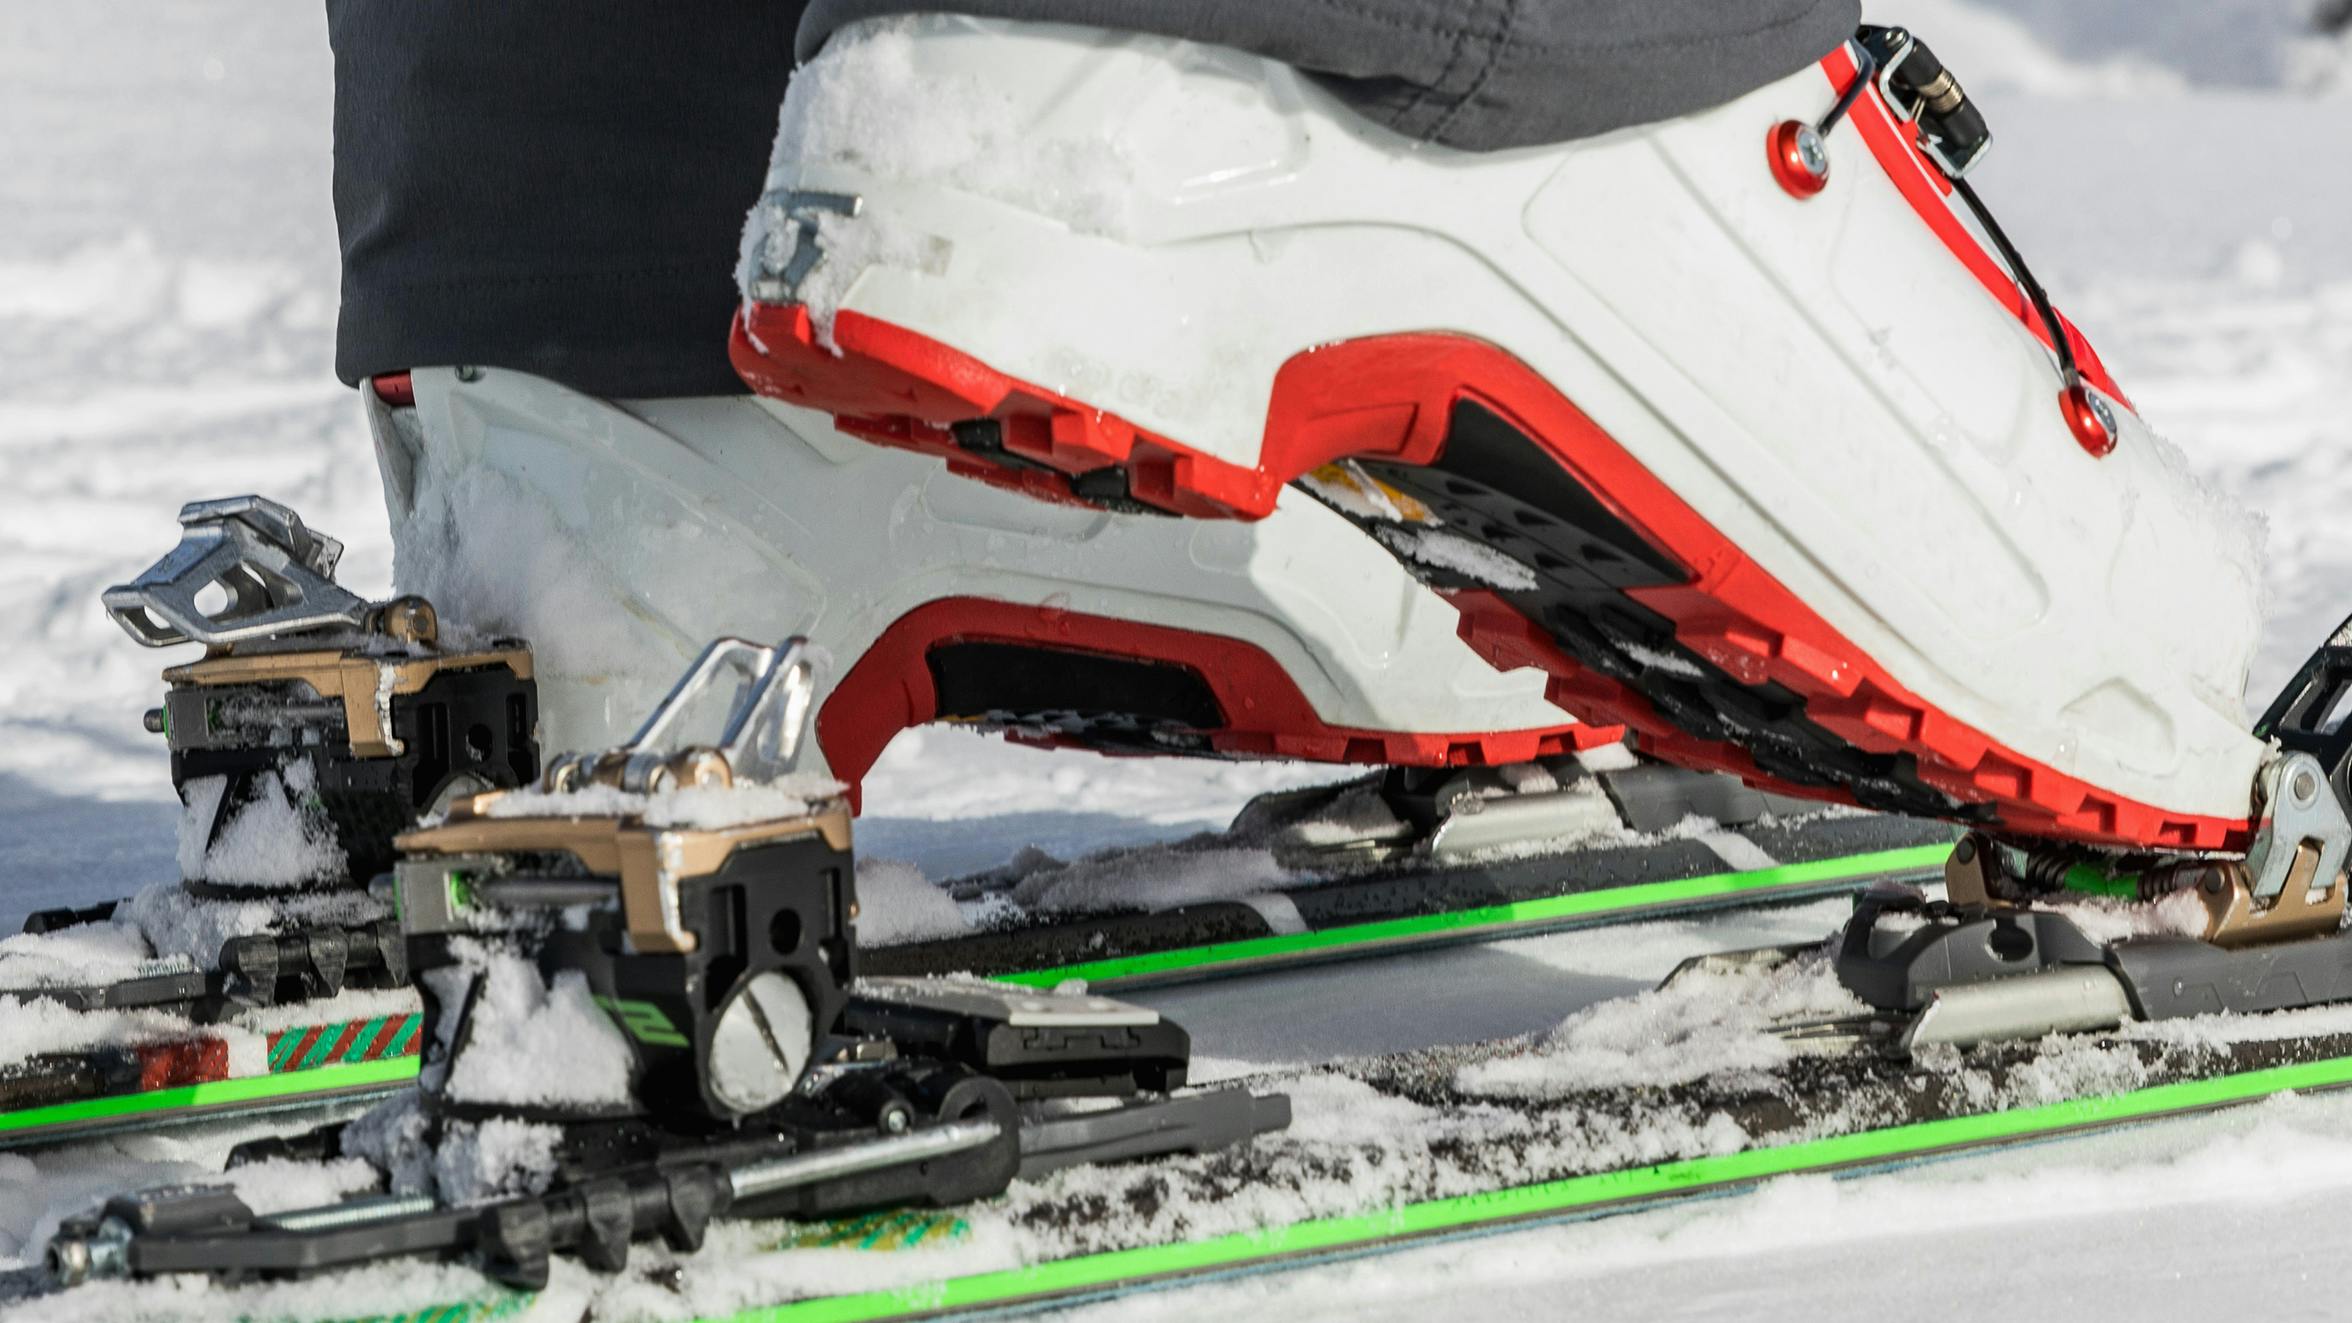 A skier putting his alpine touring boot into the Salomon MTN Ski binding. 